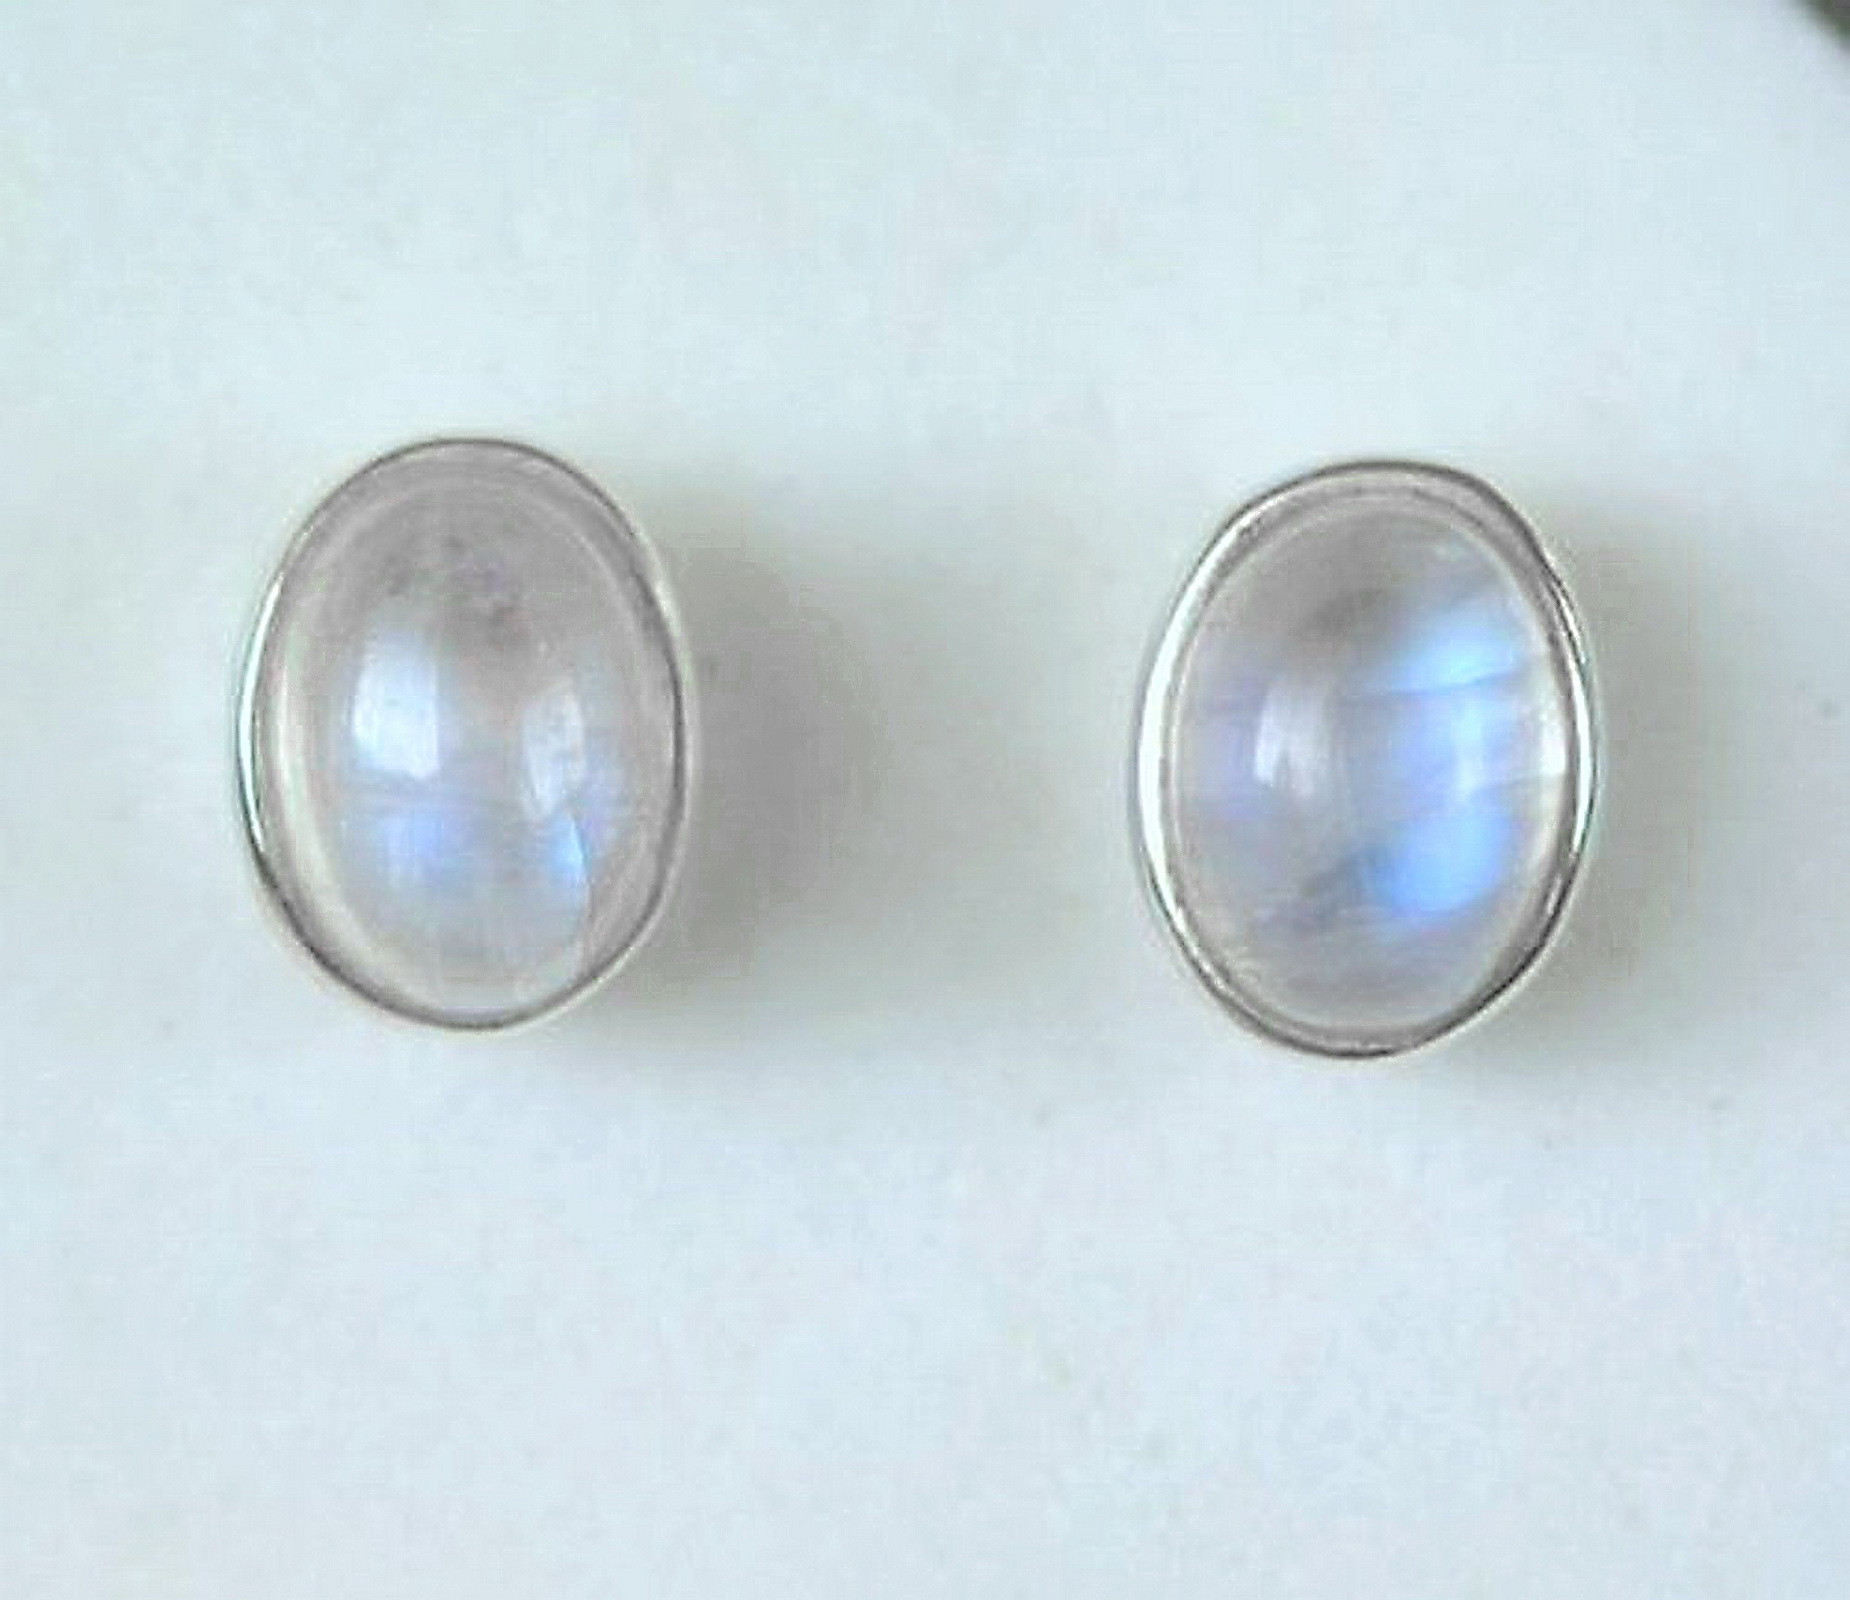  E028q  5 x 7 mm gemstone stud sterling silver earrings